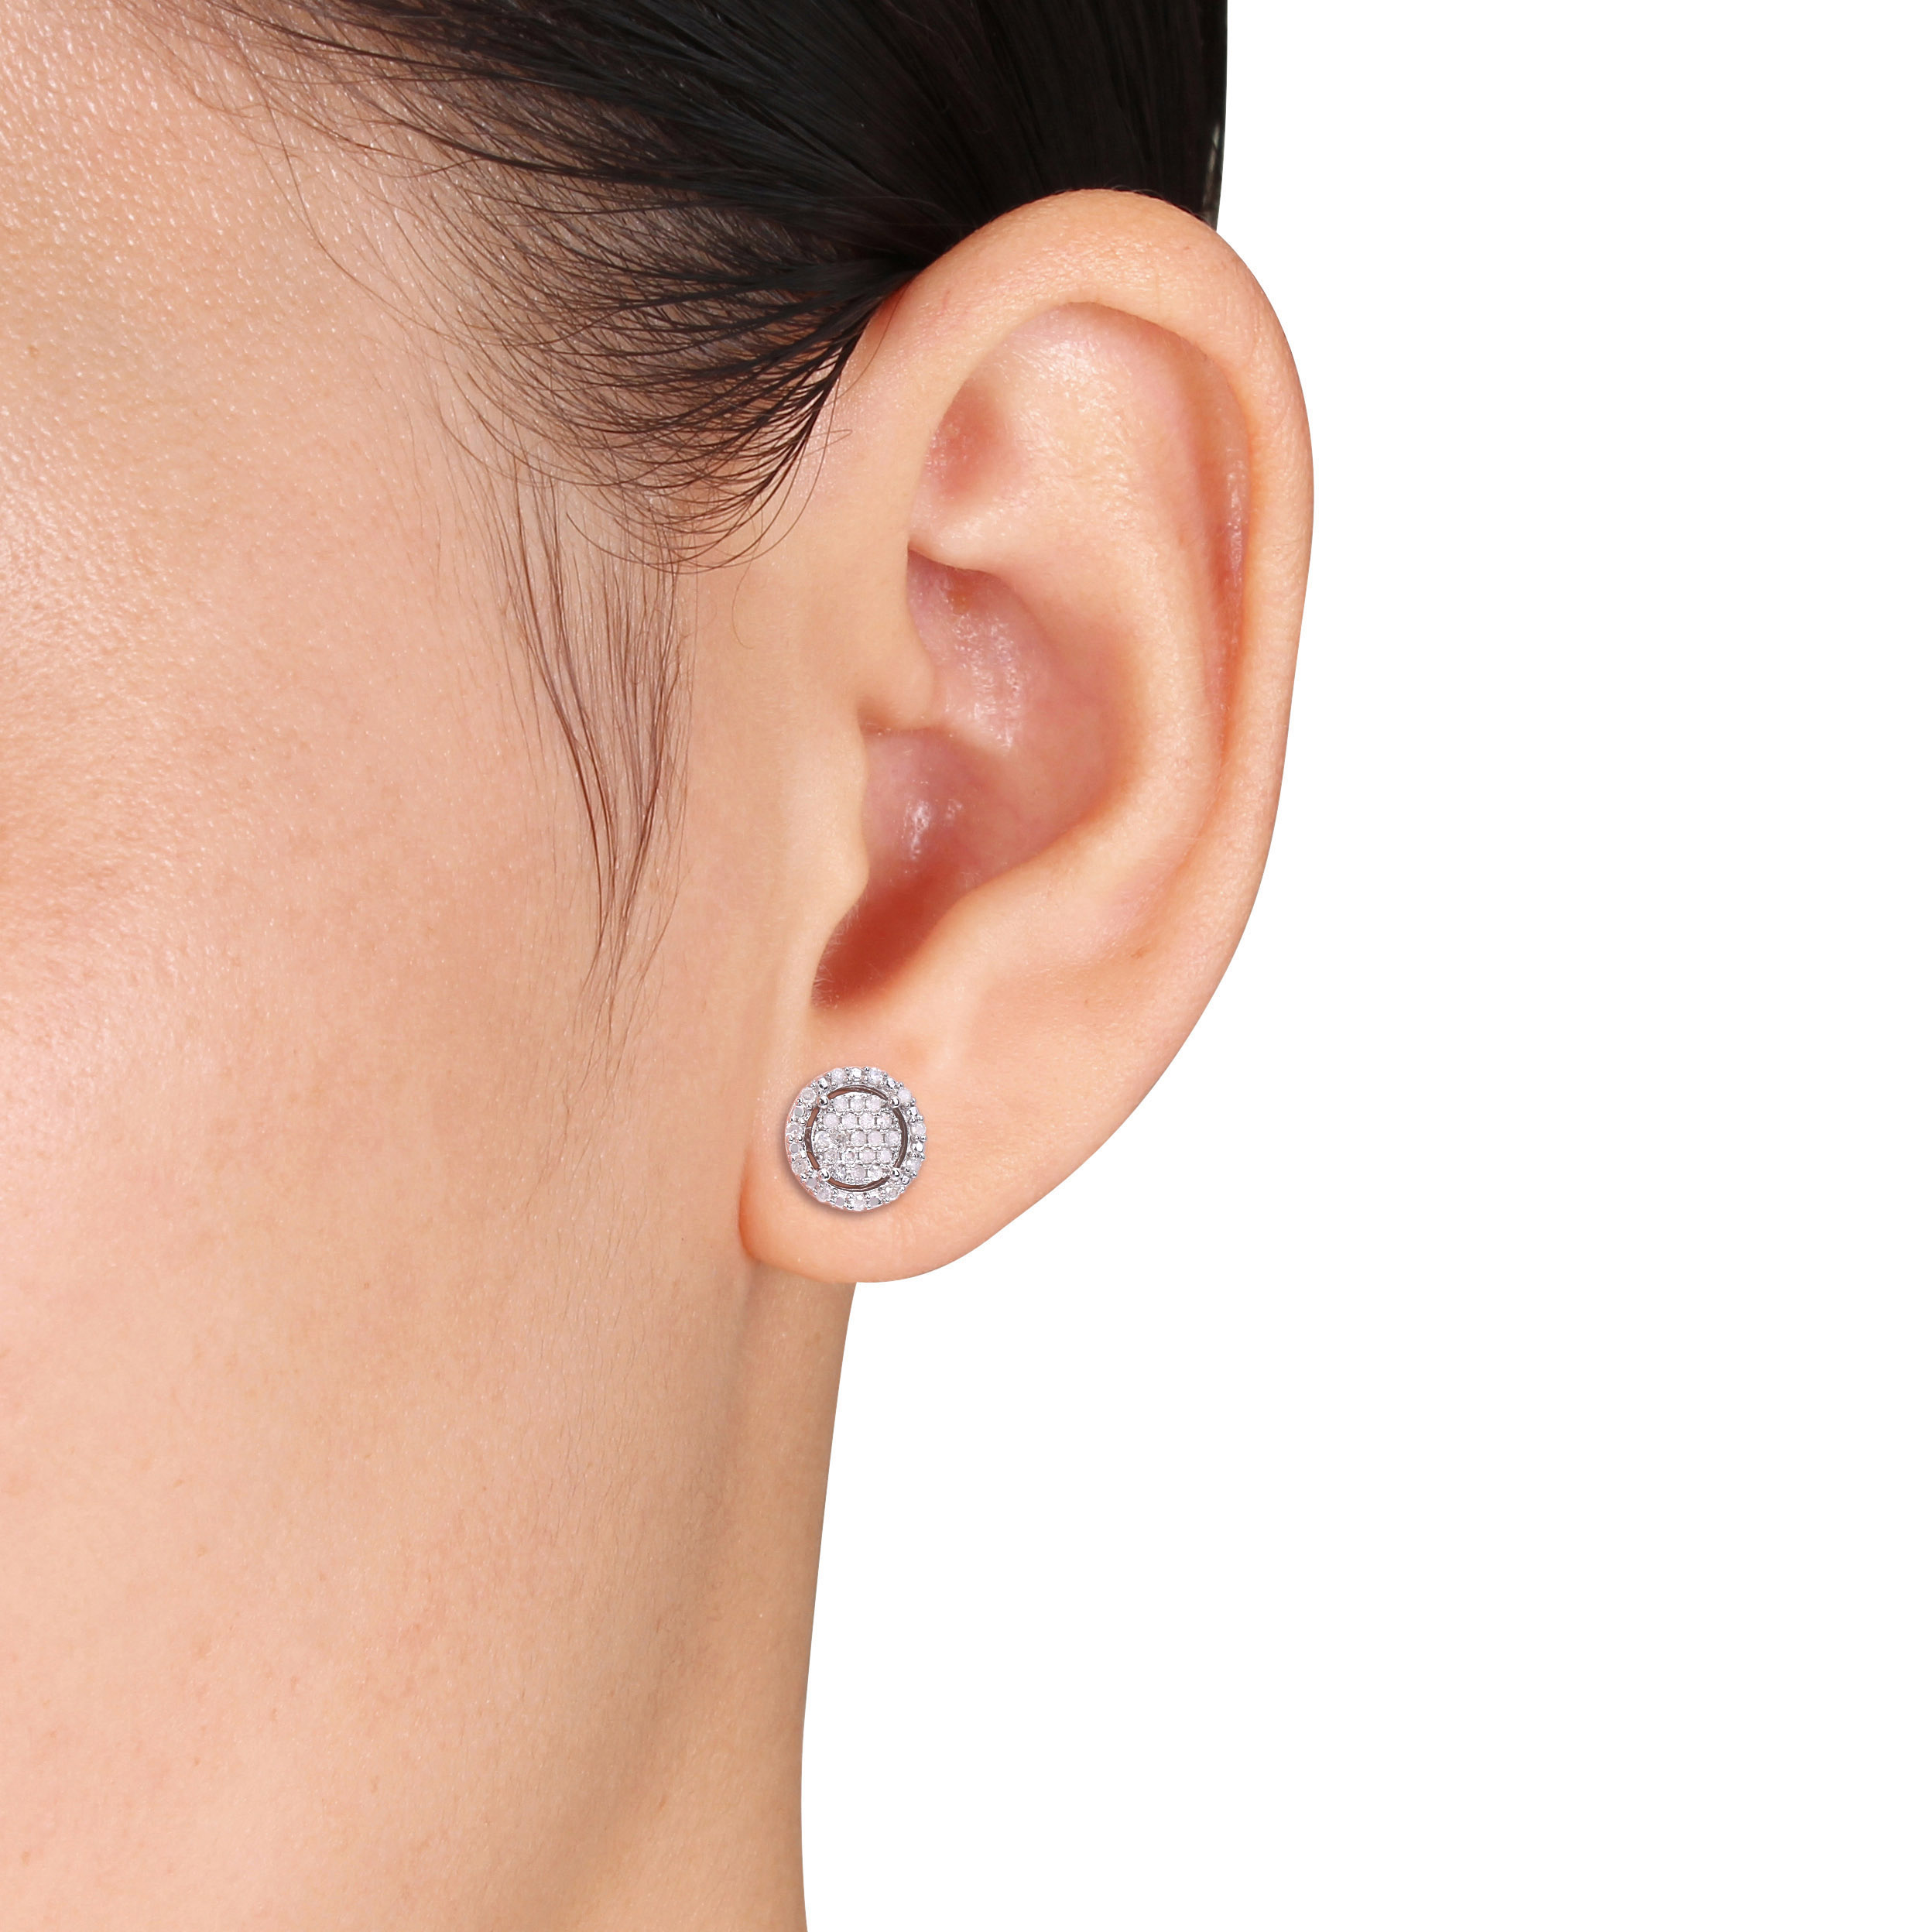 1/3 CT TW Diamond Cluster Halo Earrings in Sterling Silver